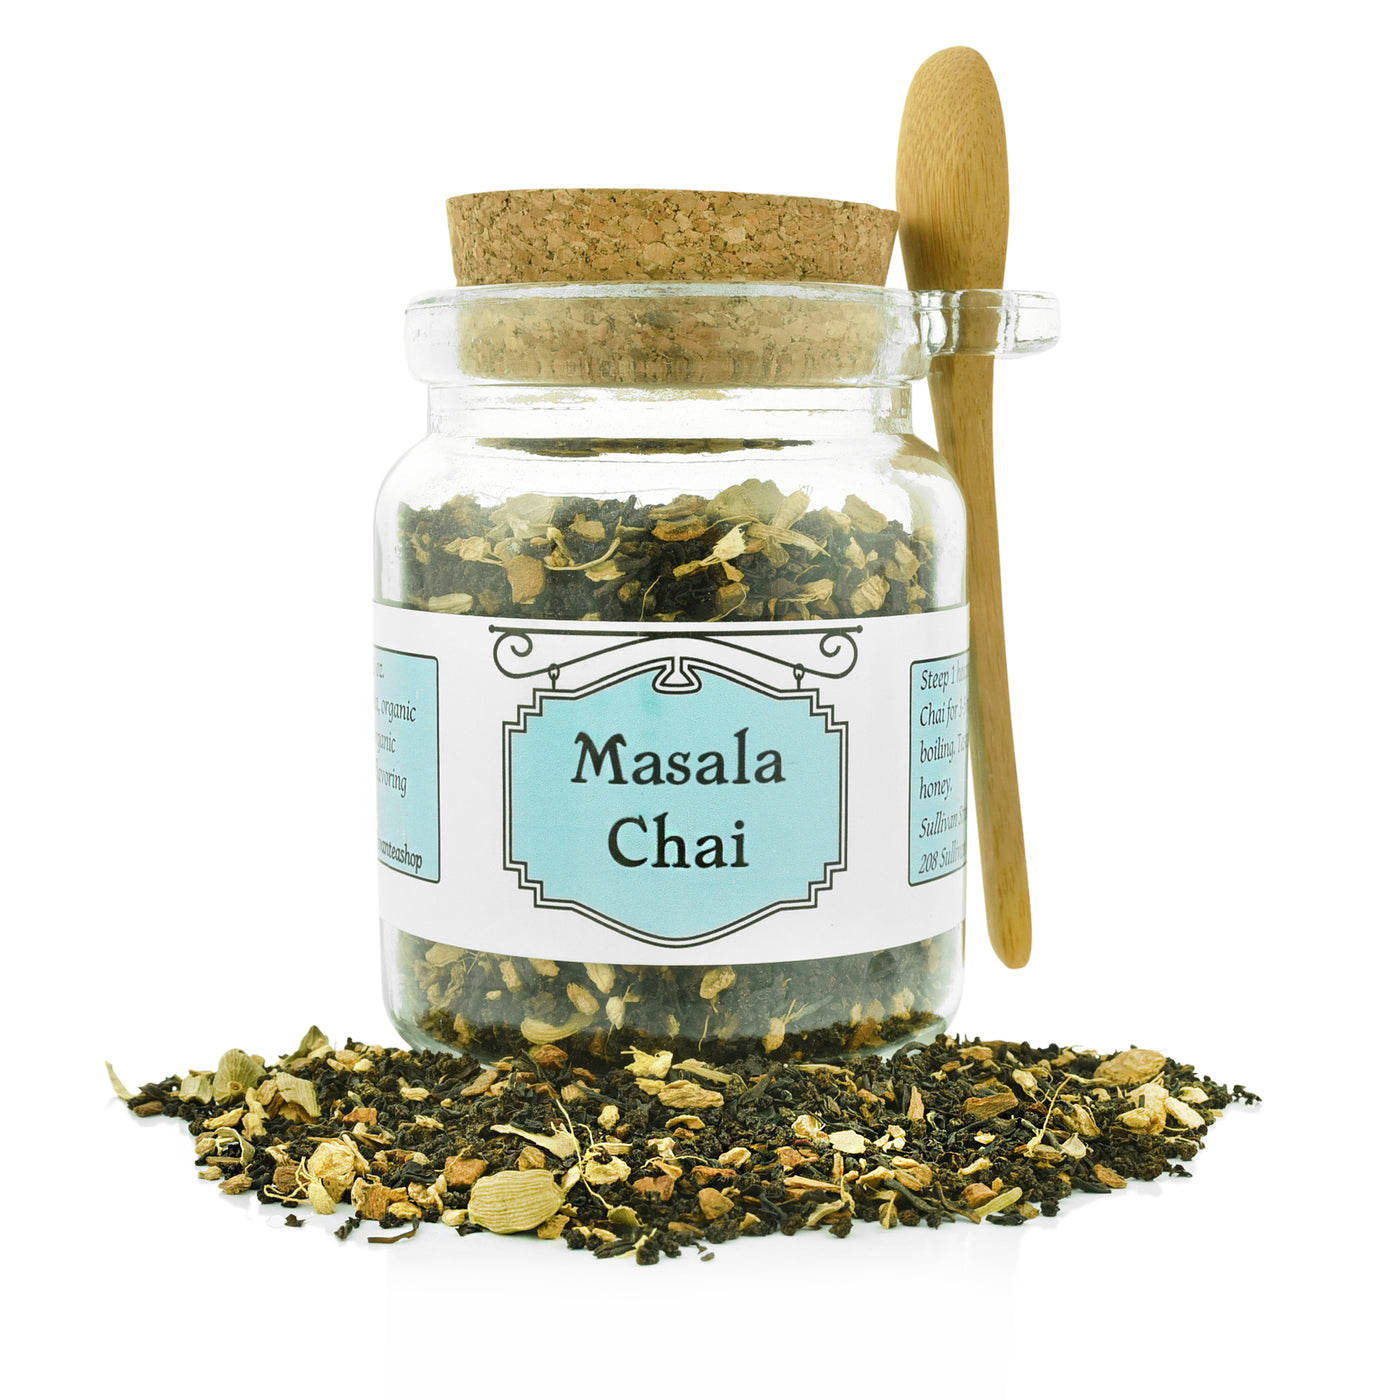 Masala Chai Gift Jar - Sullivan Street Tea & Spice Company